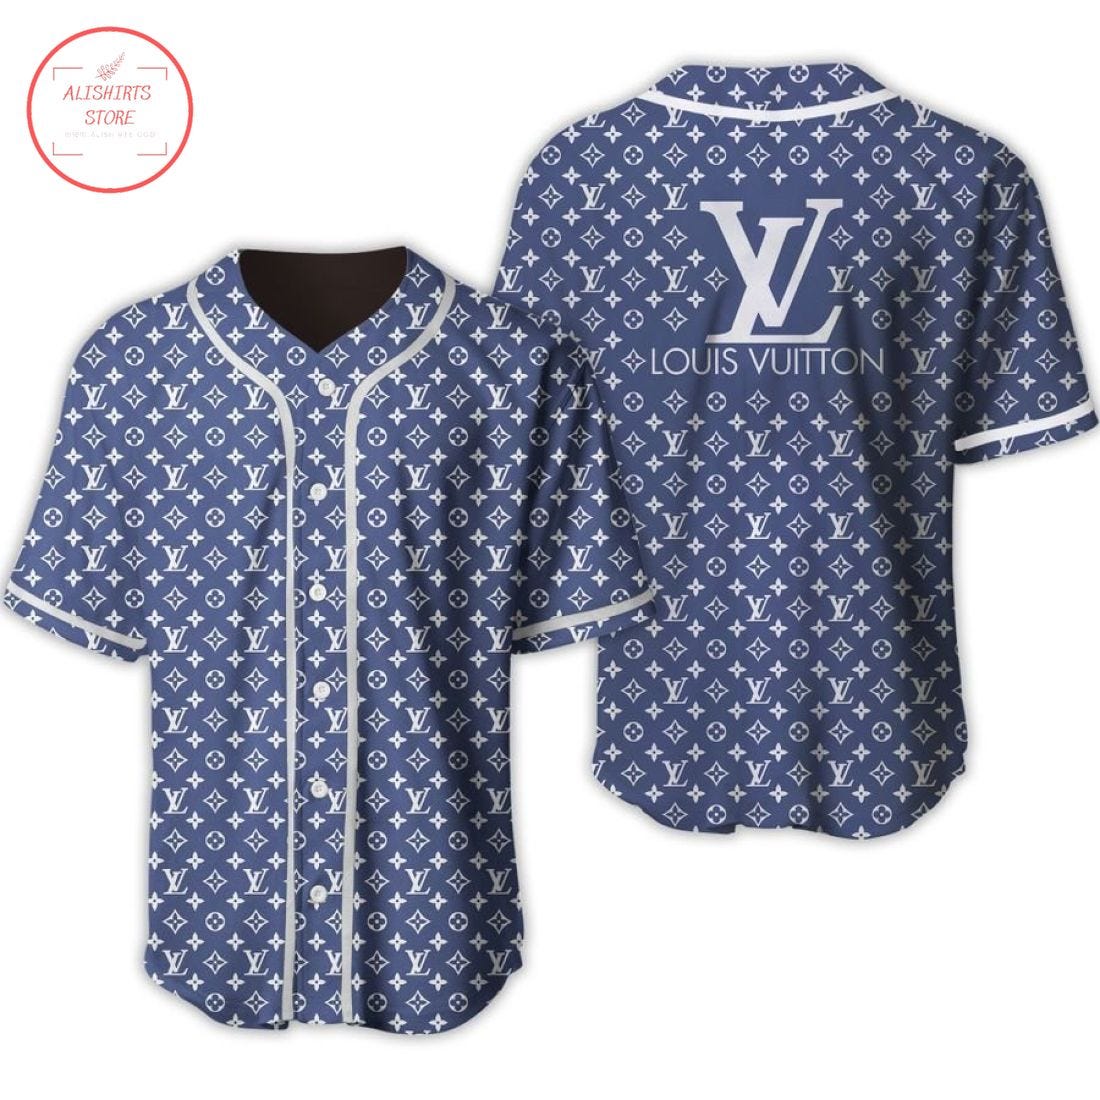 Louis vuitton baseball jersey shirt lv luxury brand clothing